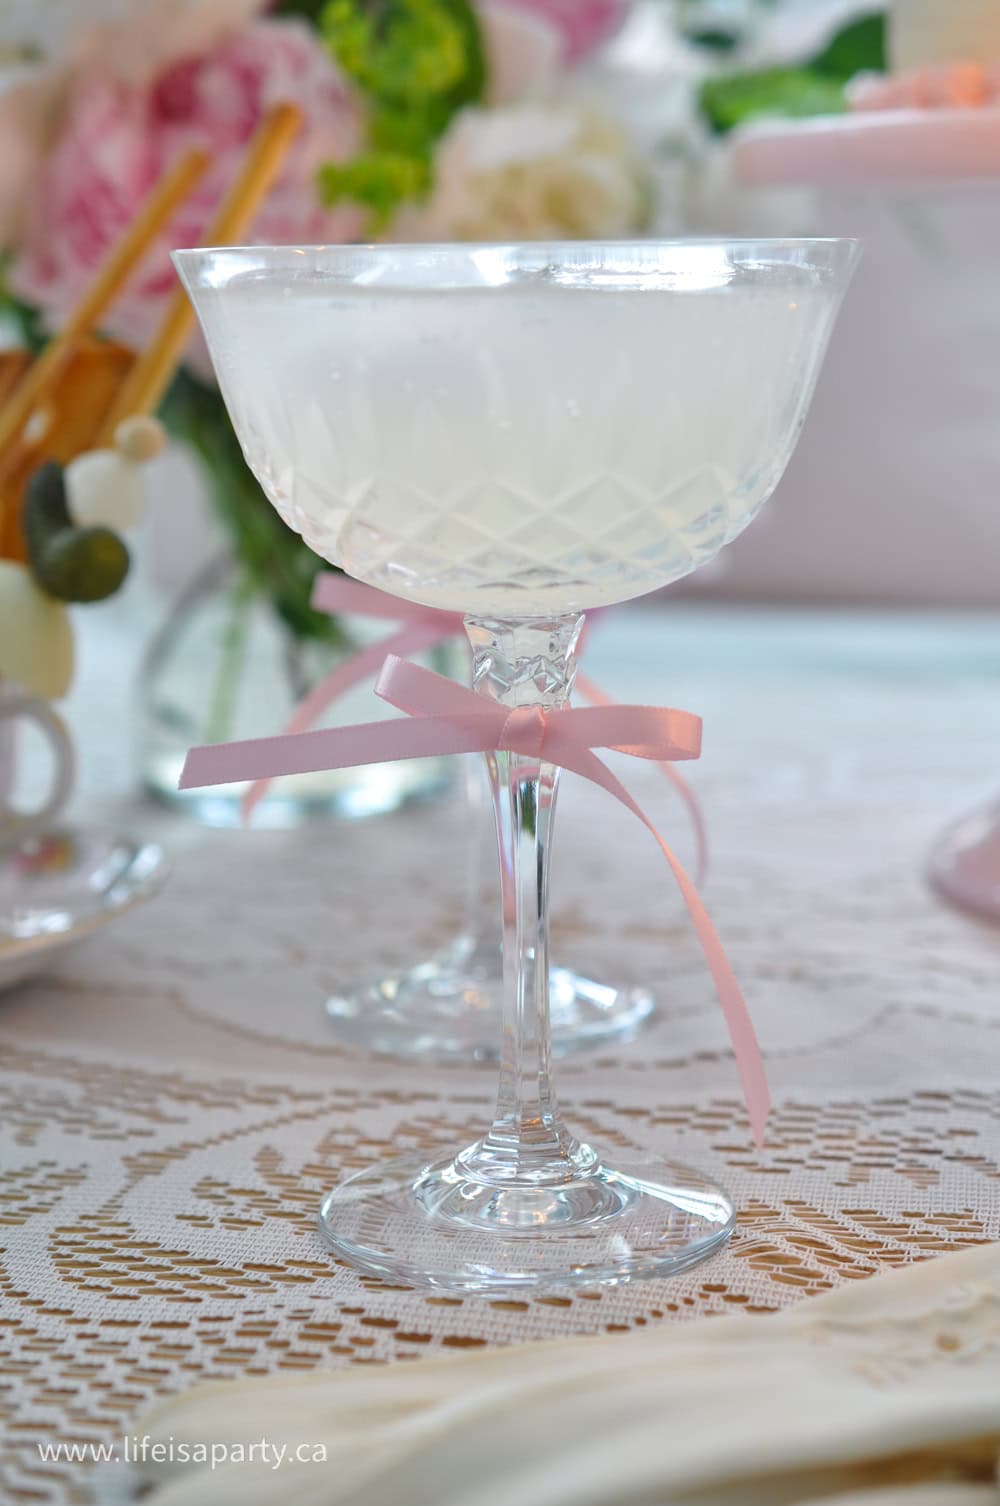 Sparkling Diamond Bridgerton themed cocktail mocktail